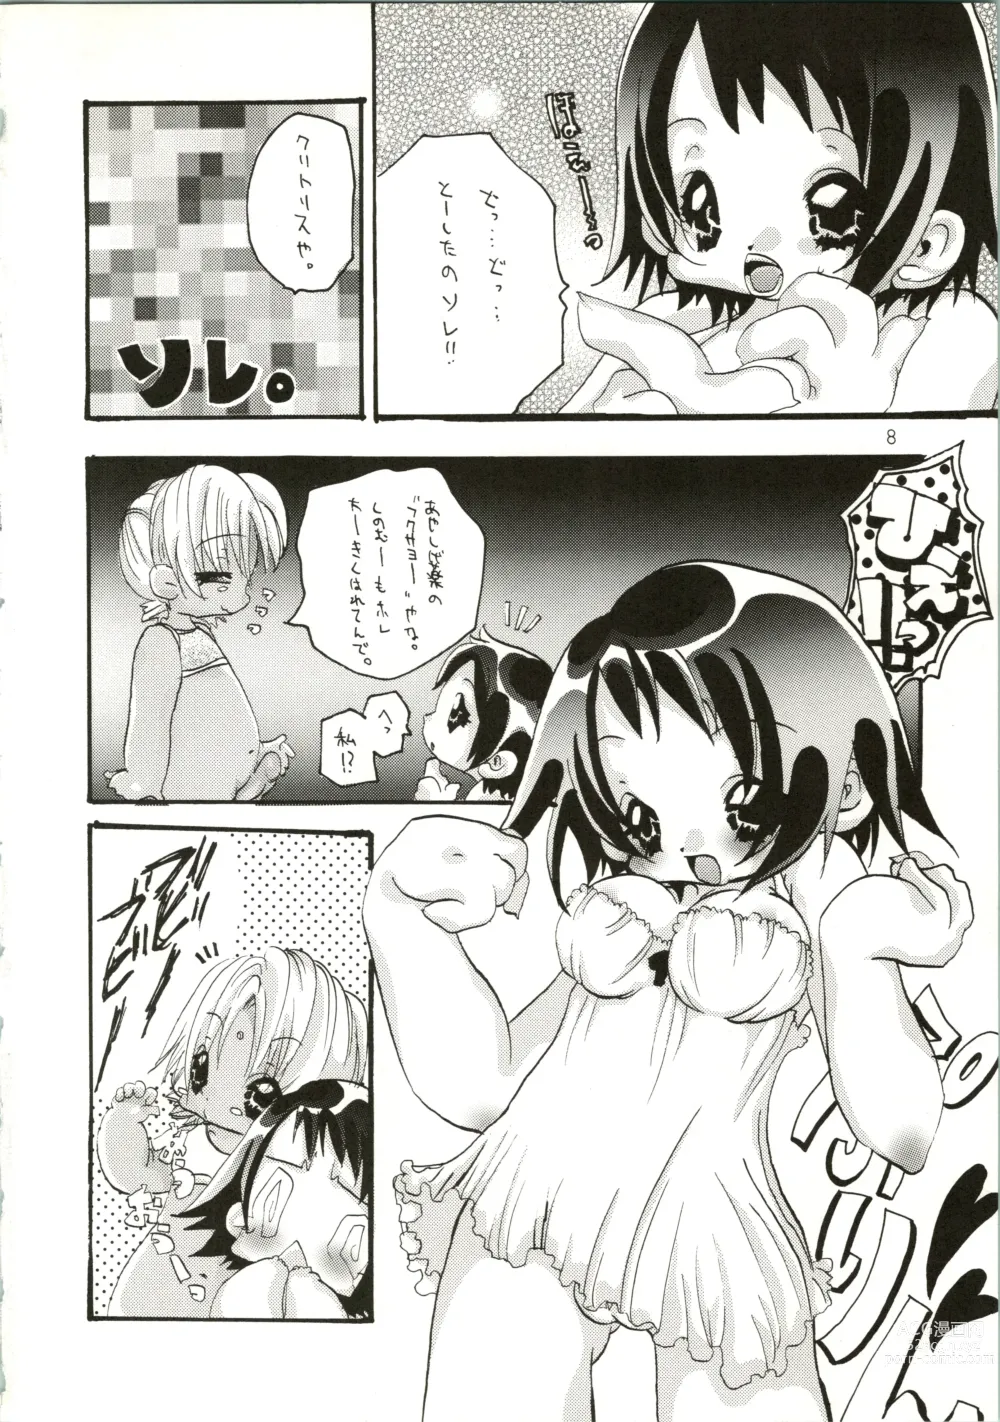 Page 8 of doujinshi Love Urashima